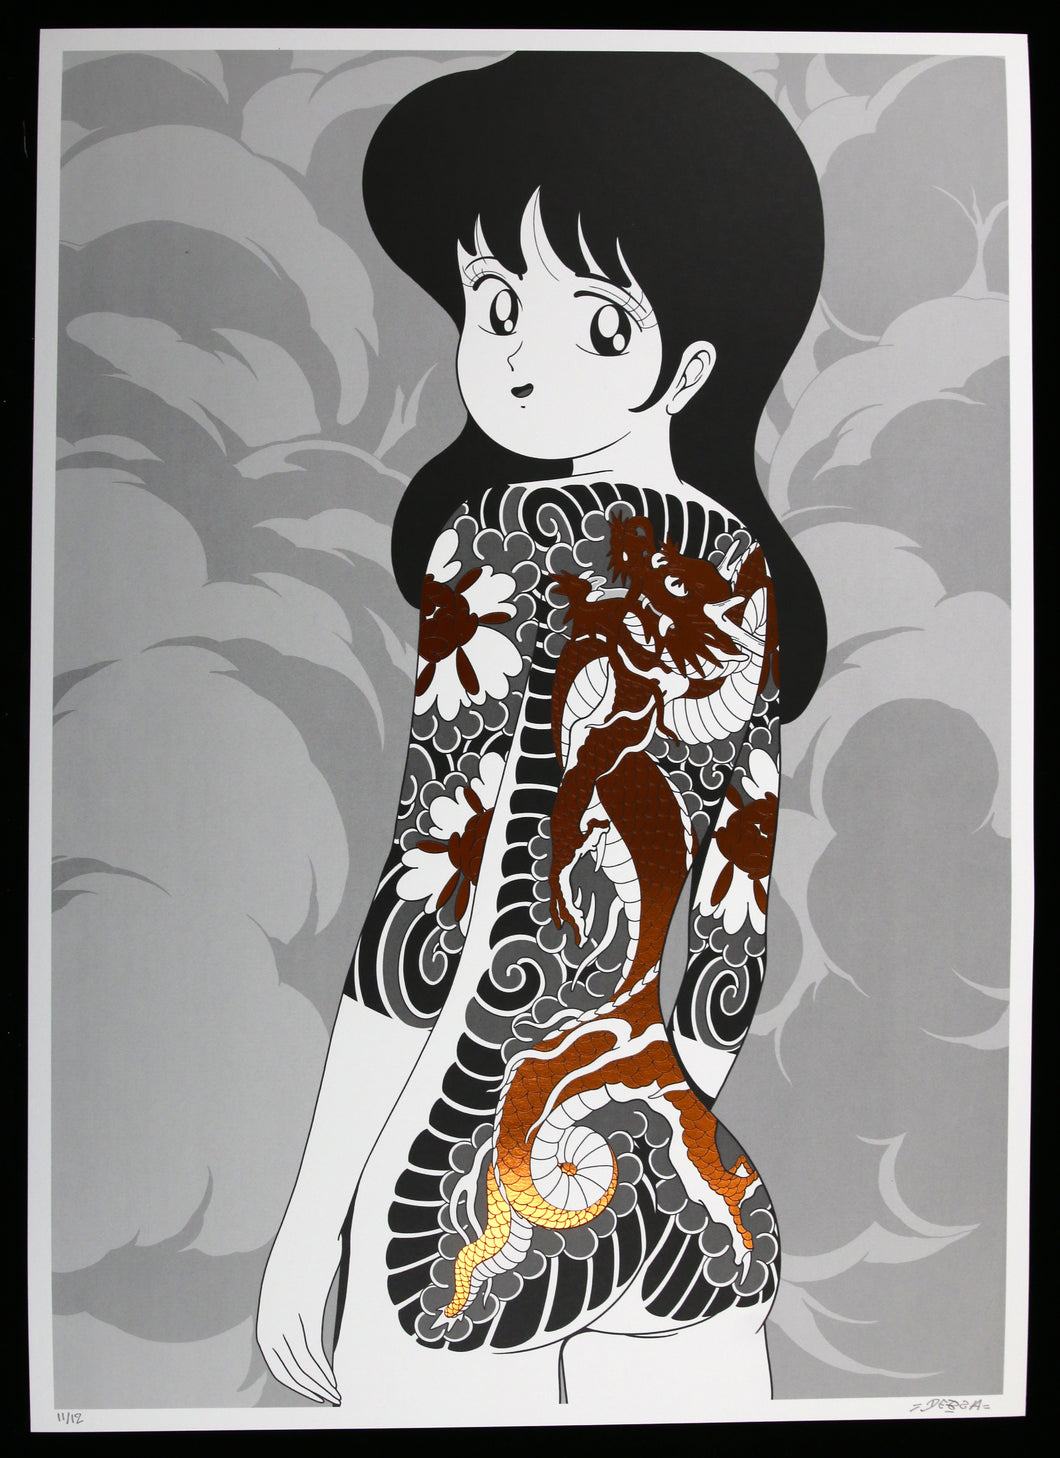 DEBZA Ryu Girl (version cuivre) - signed screenprint